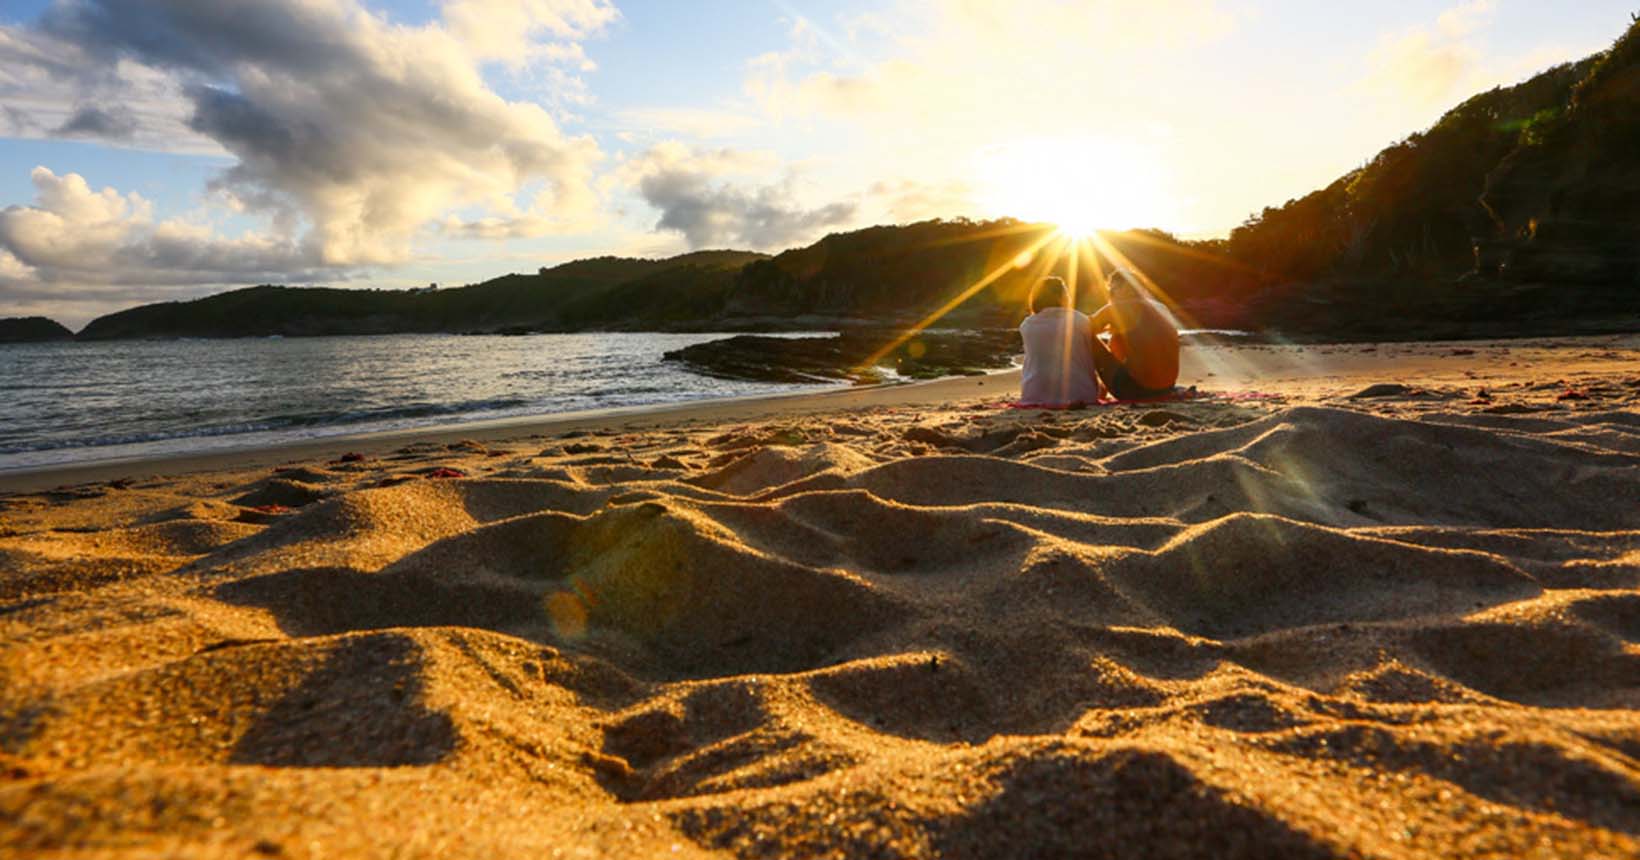 World ranking of the 10 best beaches chooses 5 Brazilians!